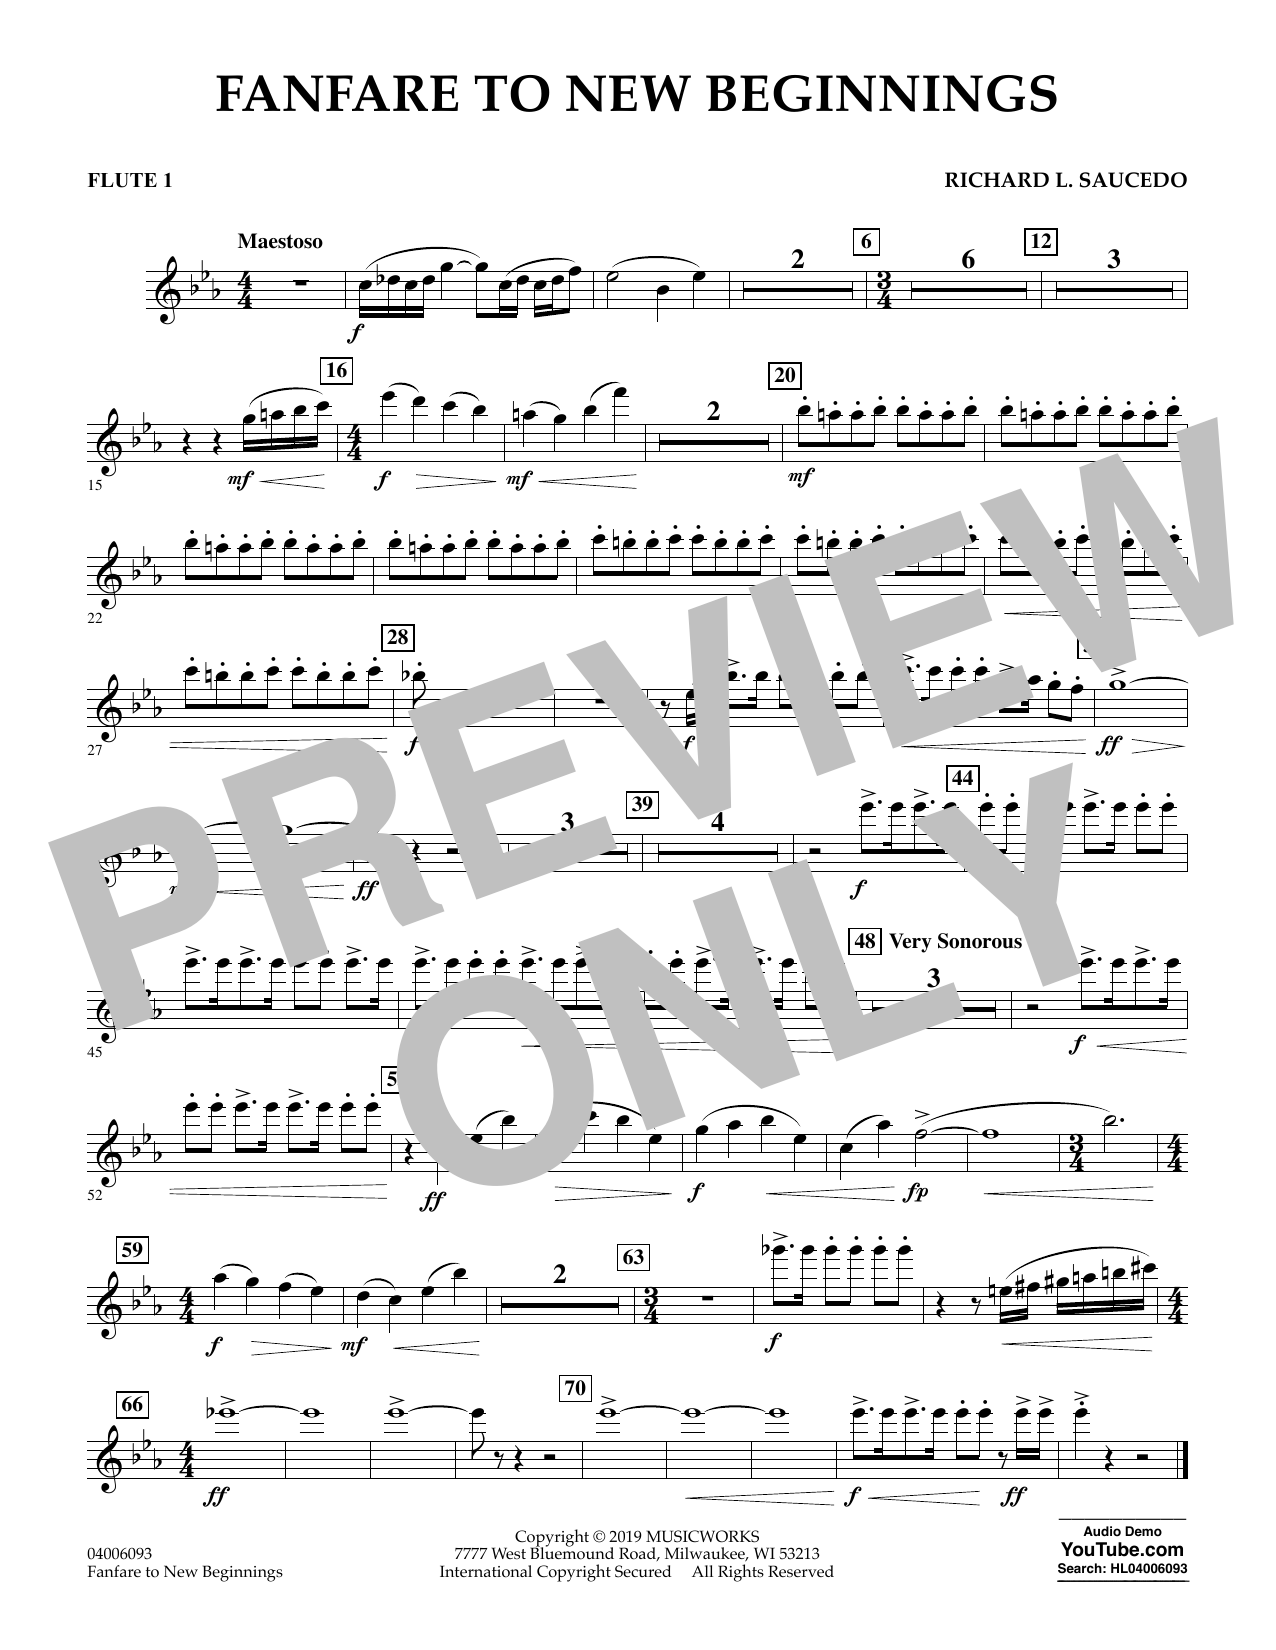 Download Richard L. Saucedo Fanfare for New Beginnings - Flute 1 Sheet Music